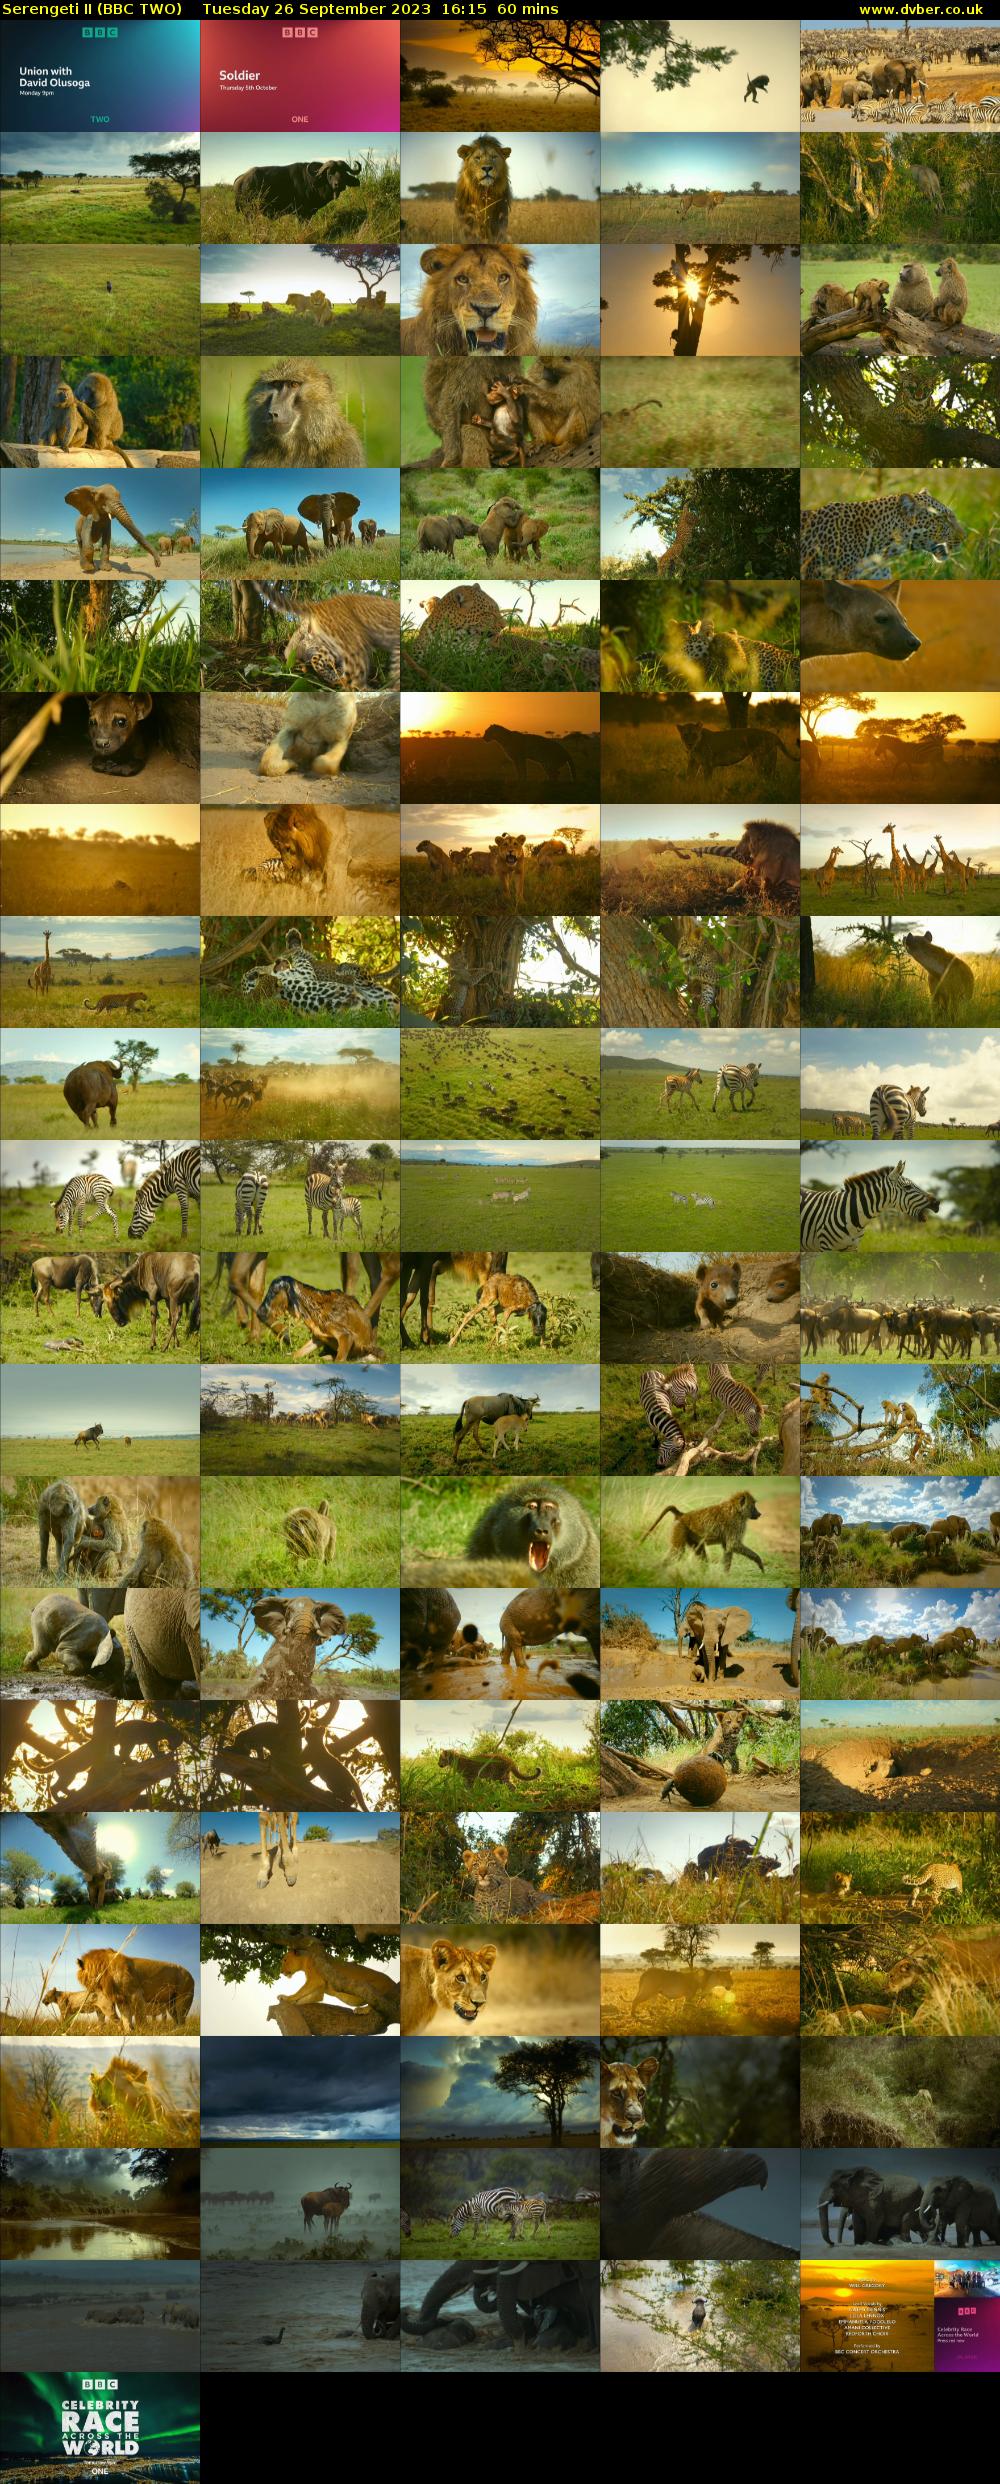 Serengeti II (BBC TWO) Tuesday 26 September 2023 16:15 - 17:15